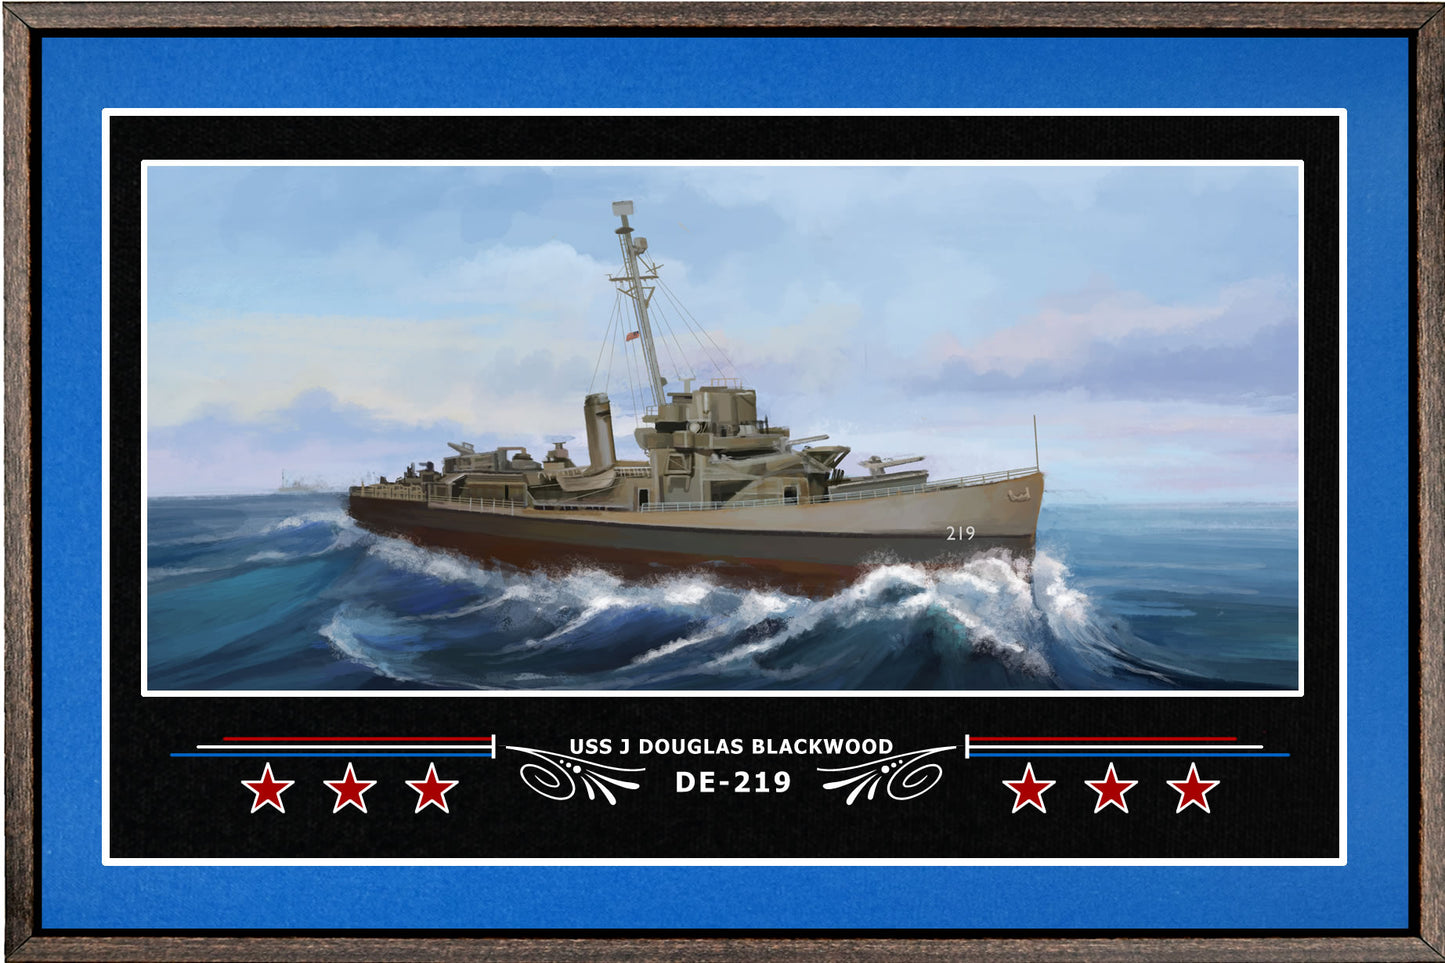 USS J DOUGLAS BLACKWOOD DE 219 BOX FRAMED CANVAS ART BLUE